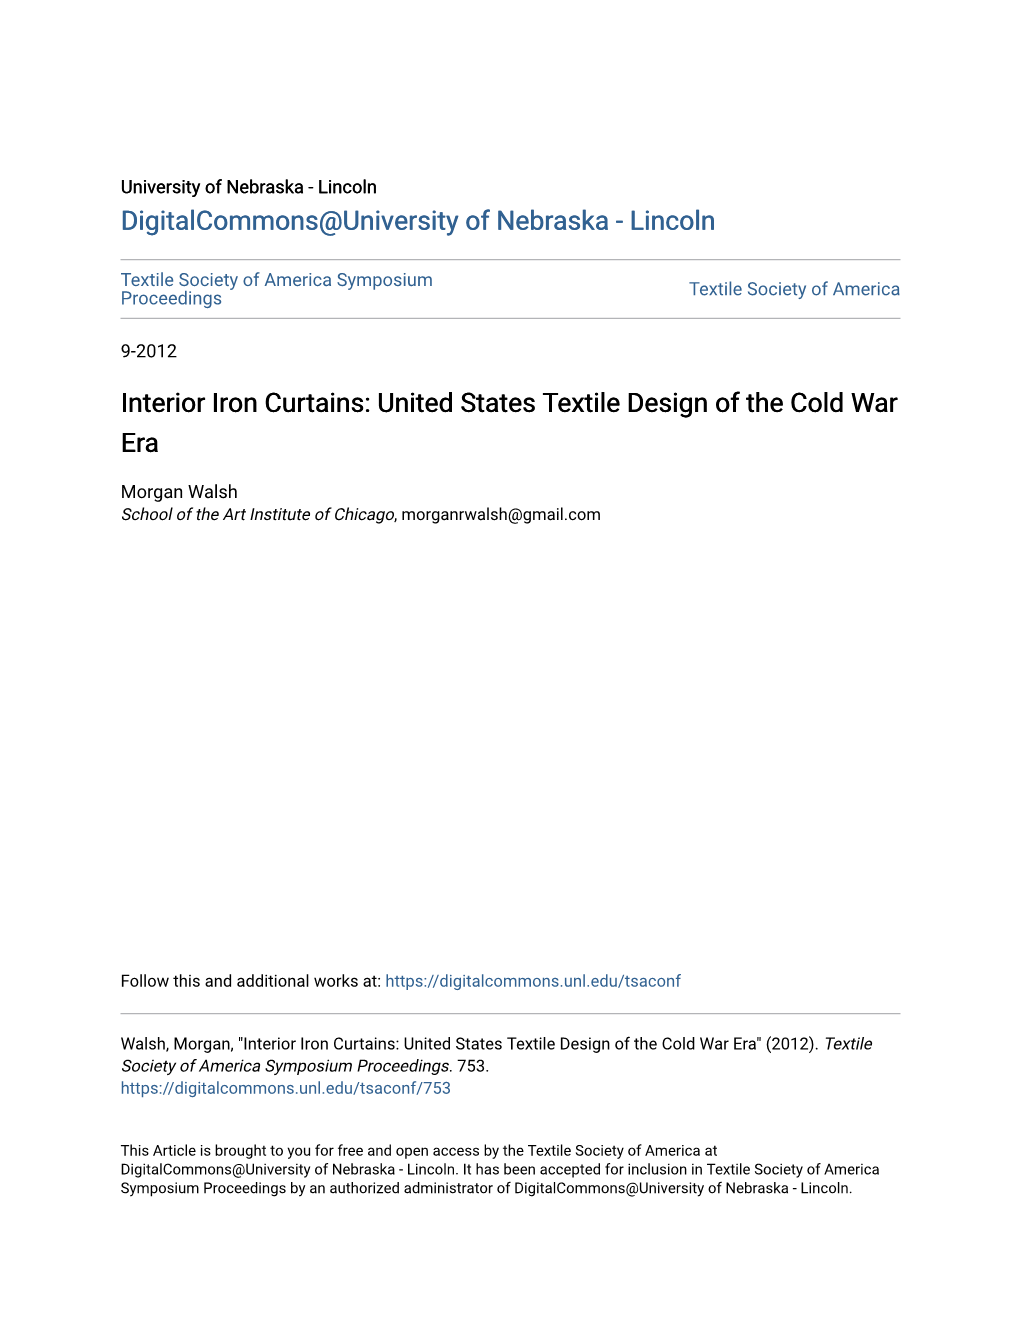 Interior Iron Curtains: United States Textile Design of the Cold War Era